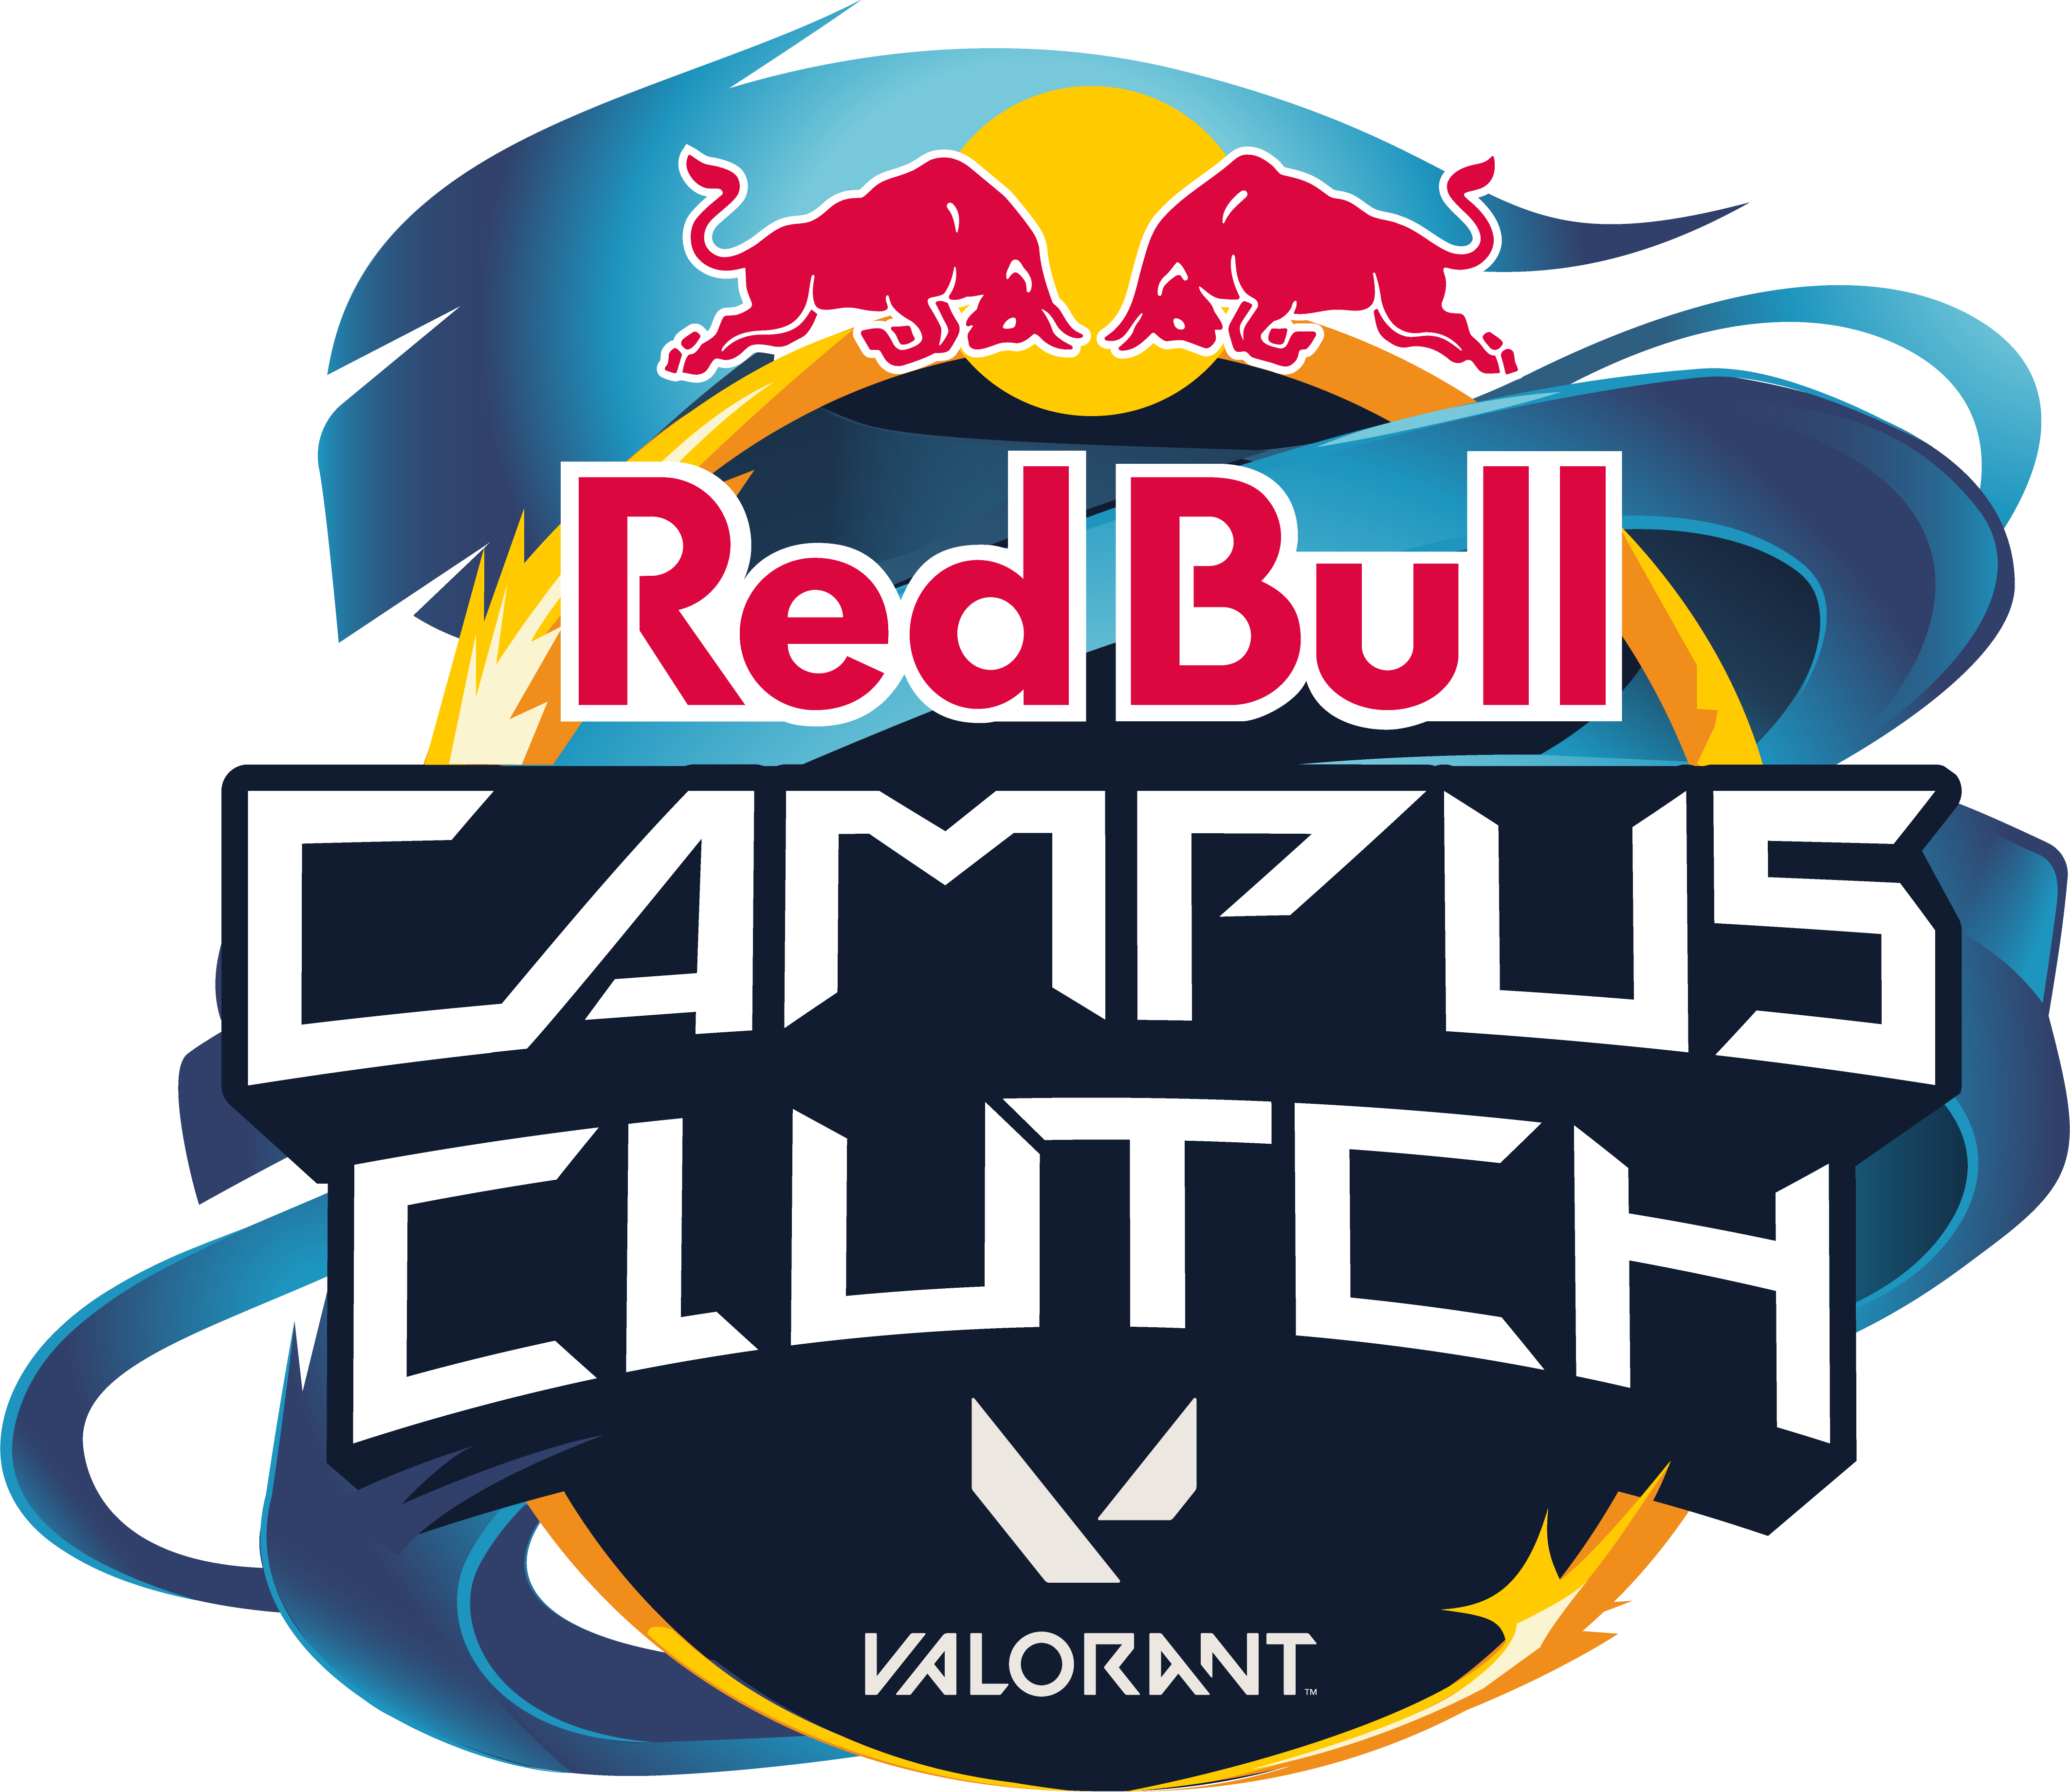 Red Bull Campus Clutch Logo ft Valorant 3 1